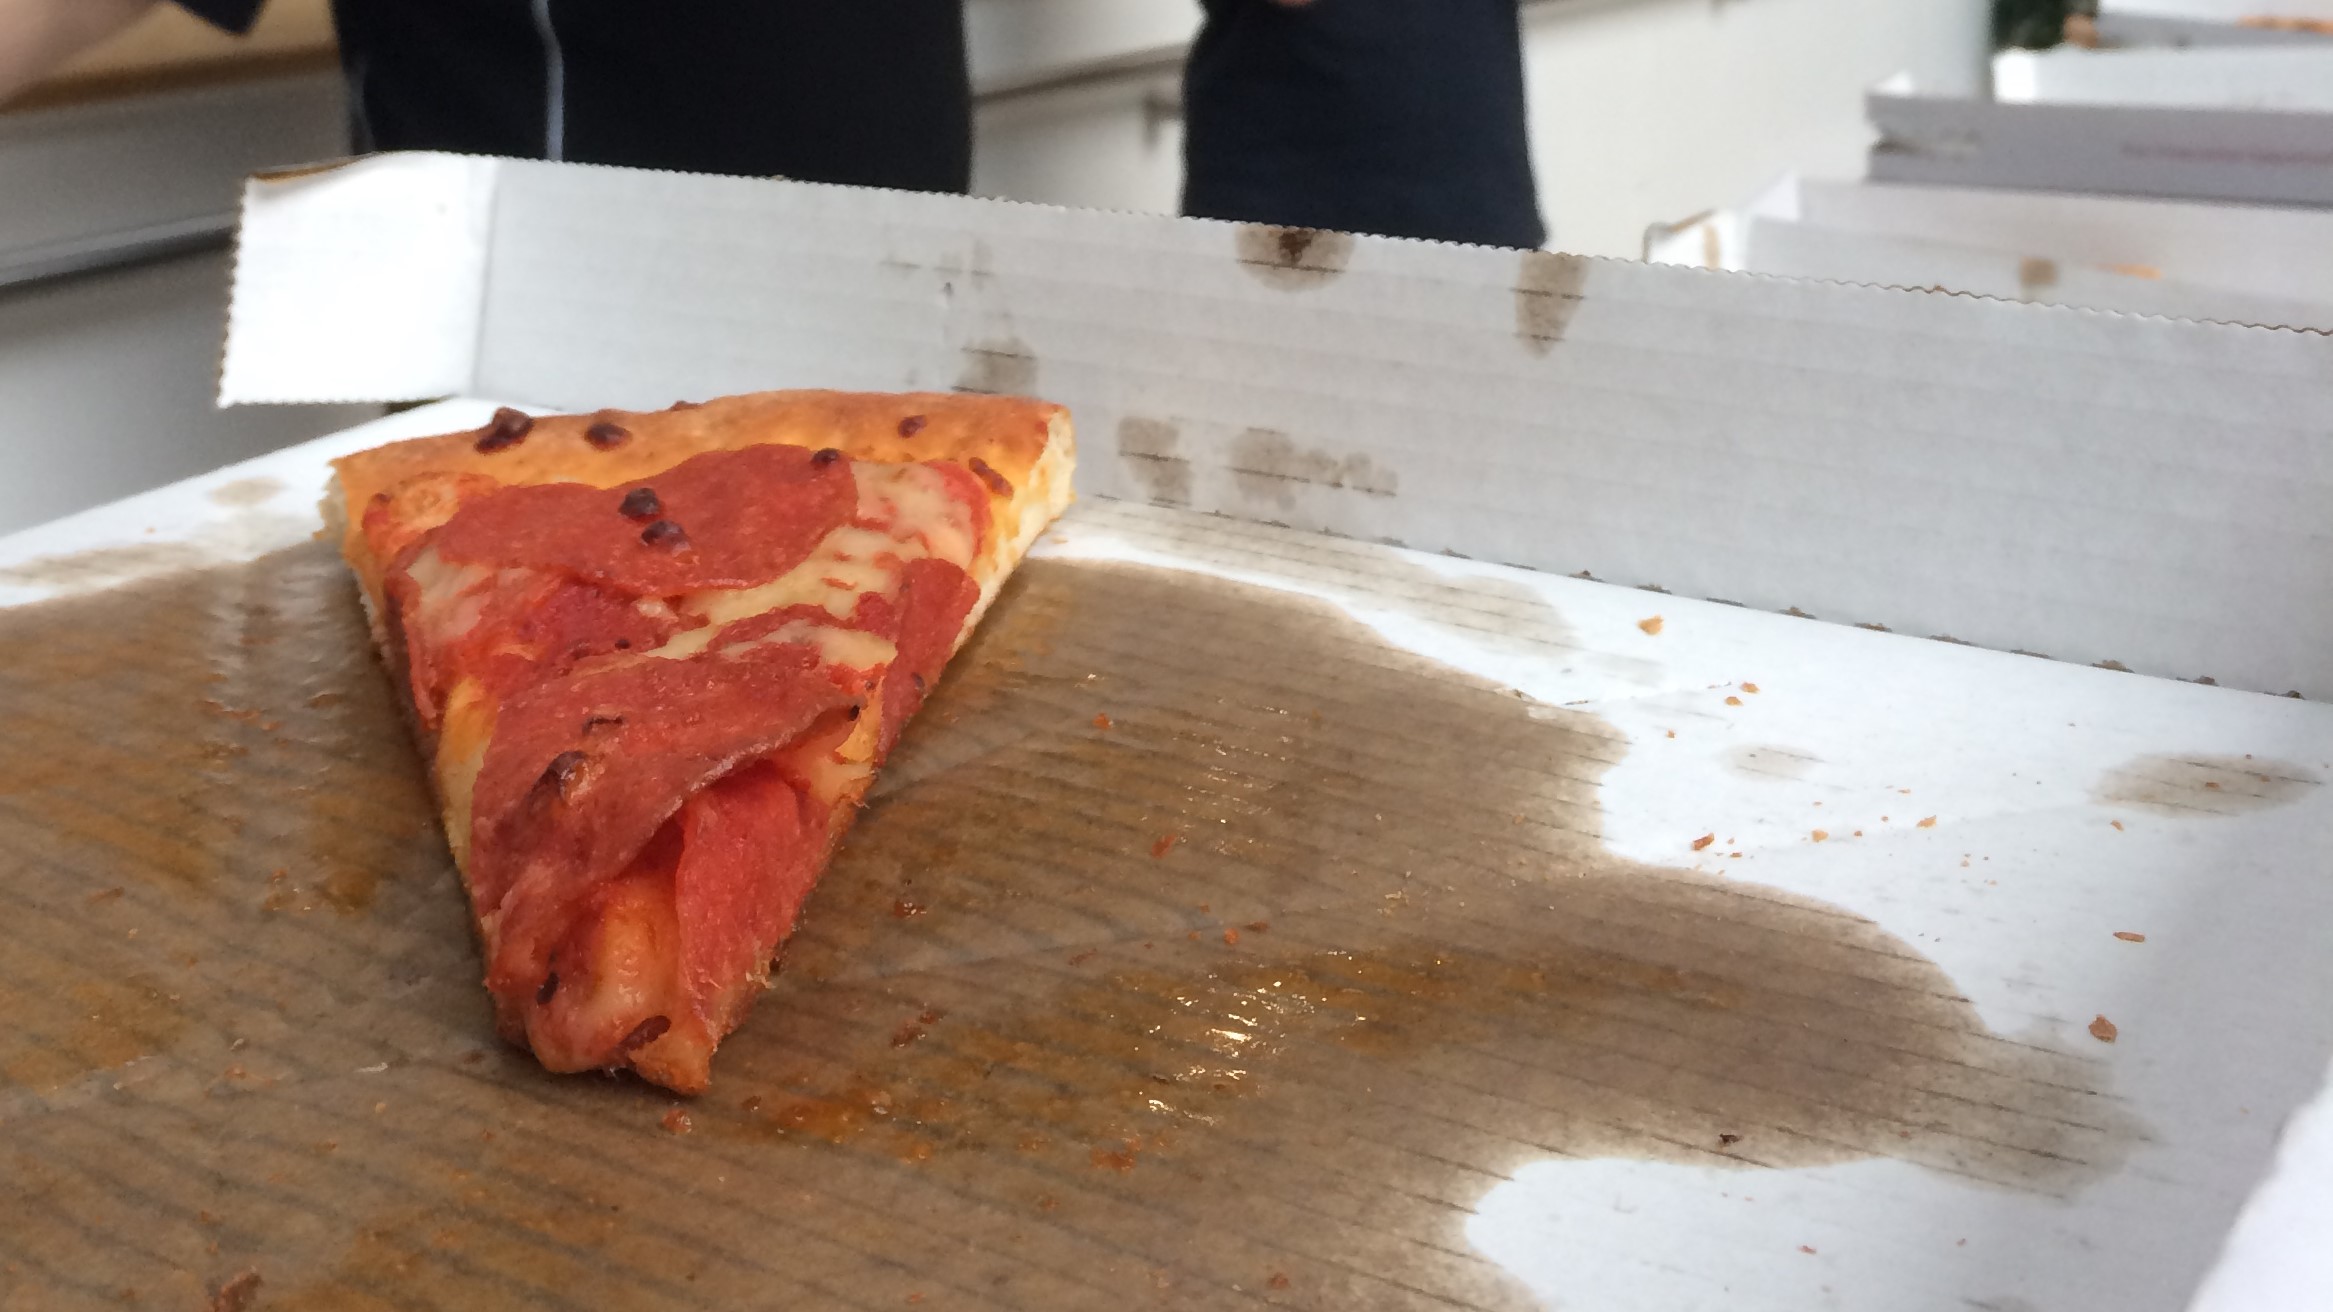 A lone slice of pizza in a greasy box.